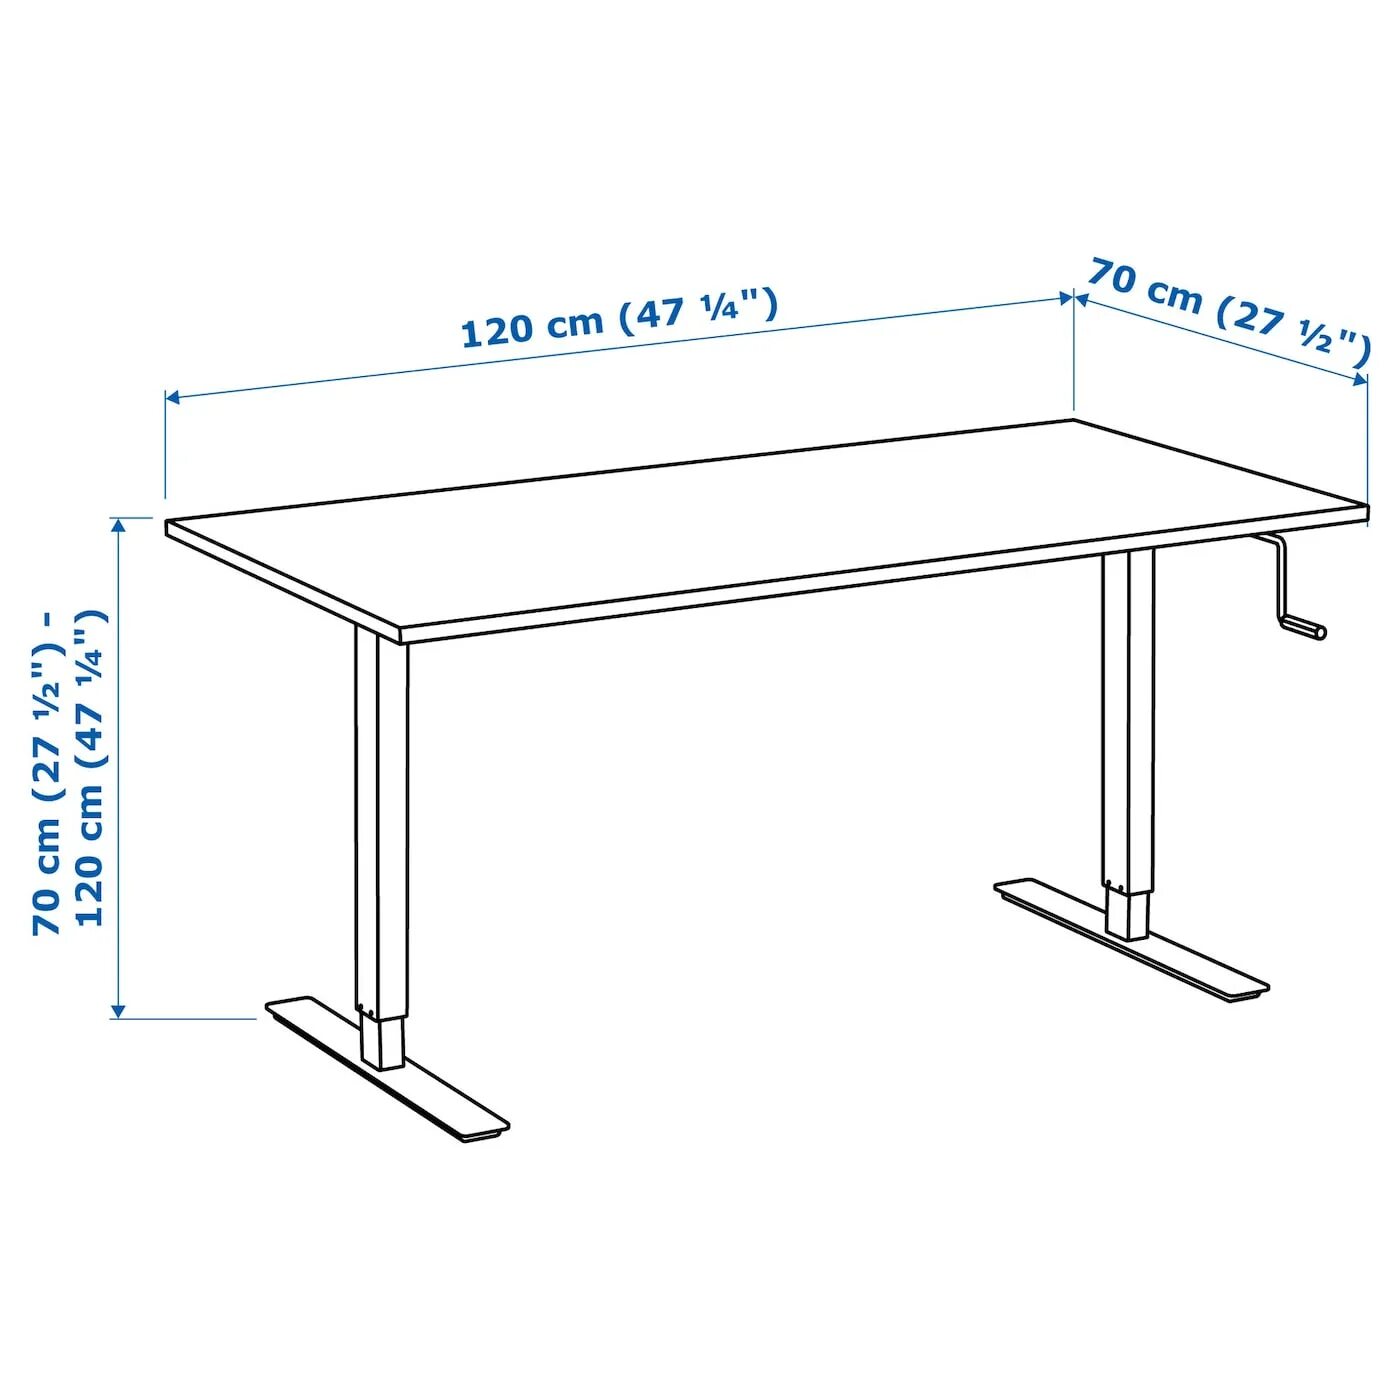 Стол высота 120. Ikea skarsta 160x80. Ikea skarsta стол. Стол икеа регулируемый по высоте. Регулируемый стол икеа СКАРСТА.